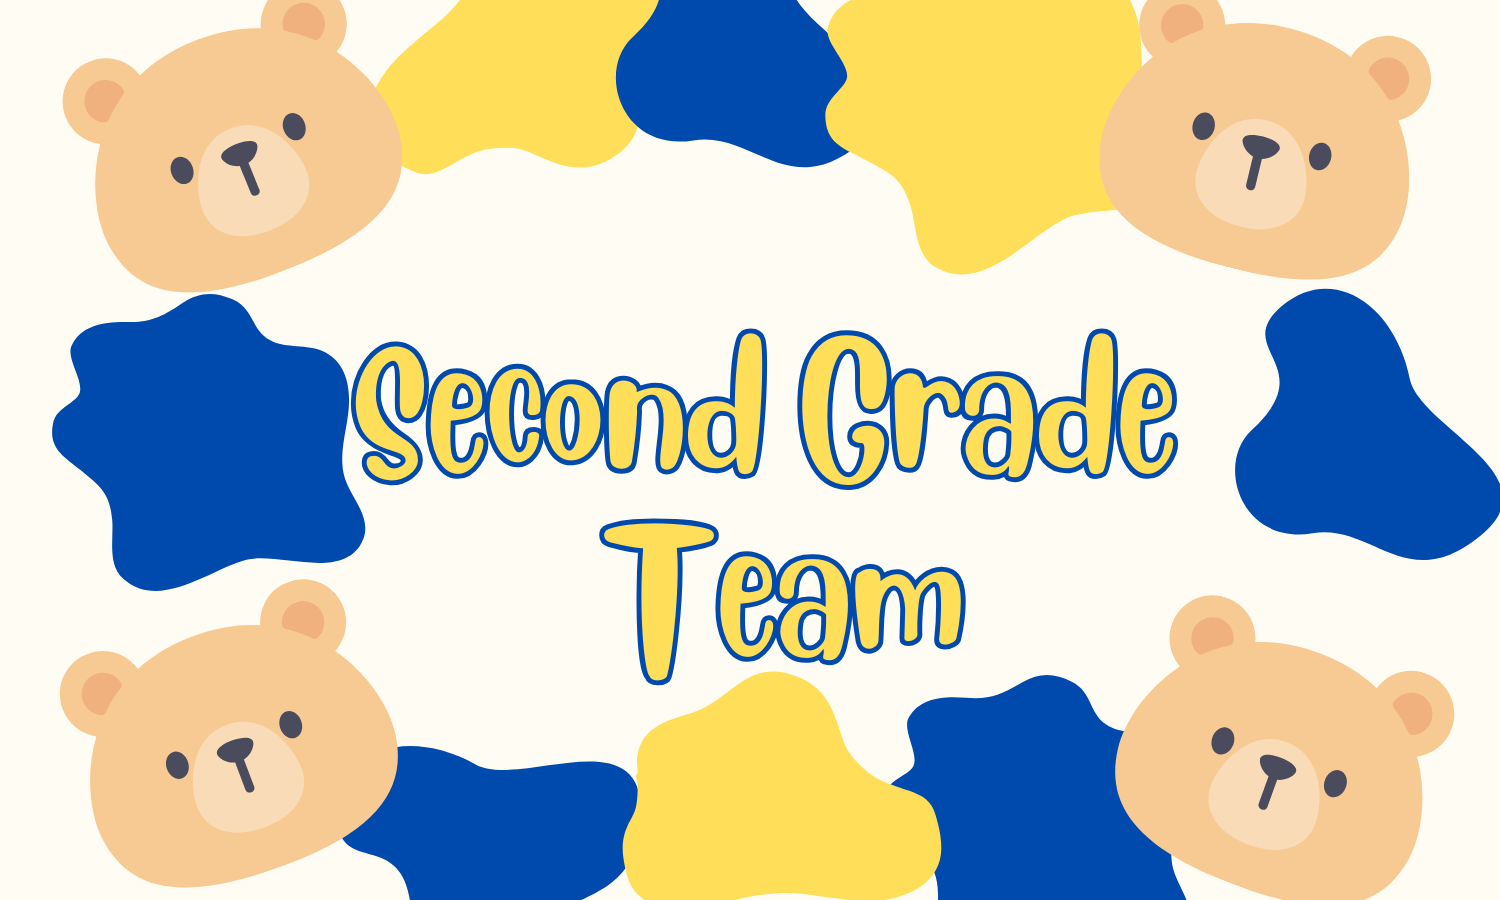 Second Grade Team Image Title